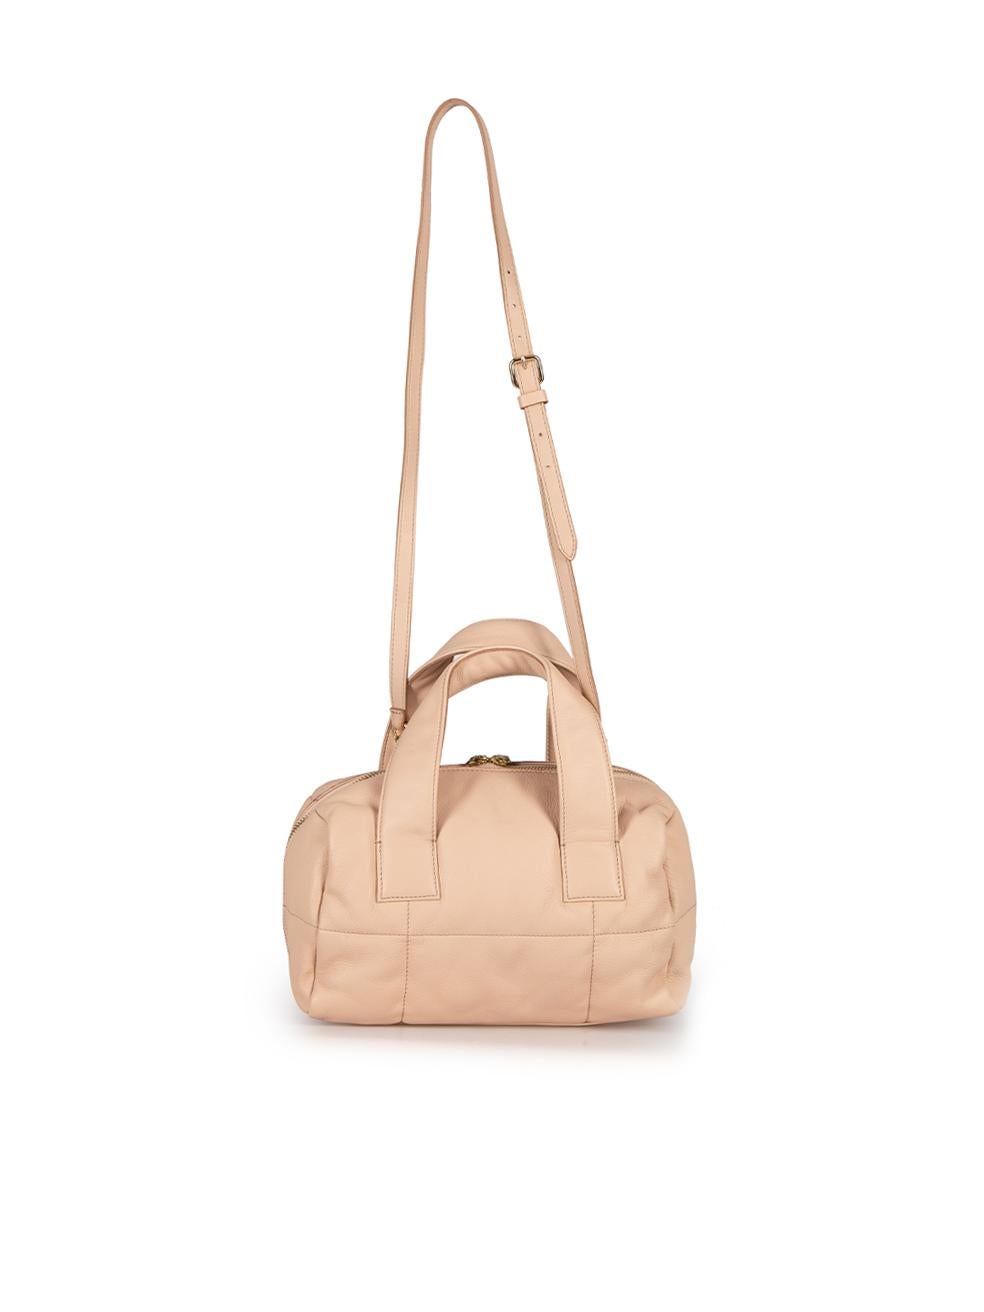 Dries Van Noten Women's Pink Quilted Leather Handbag In Good Condition In London, GB